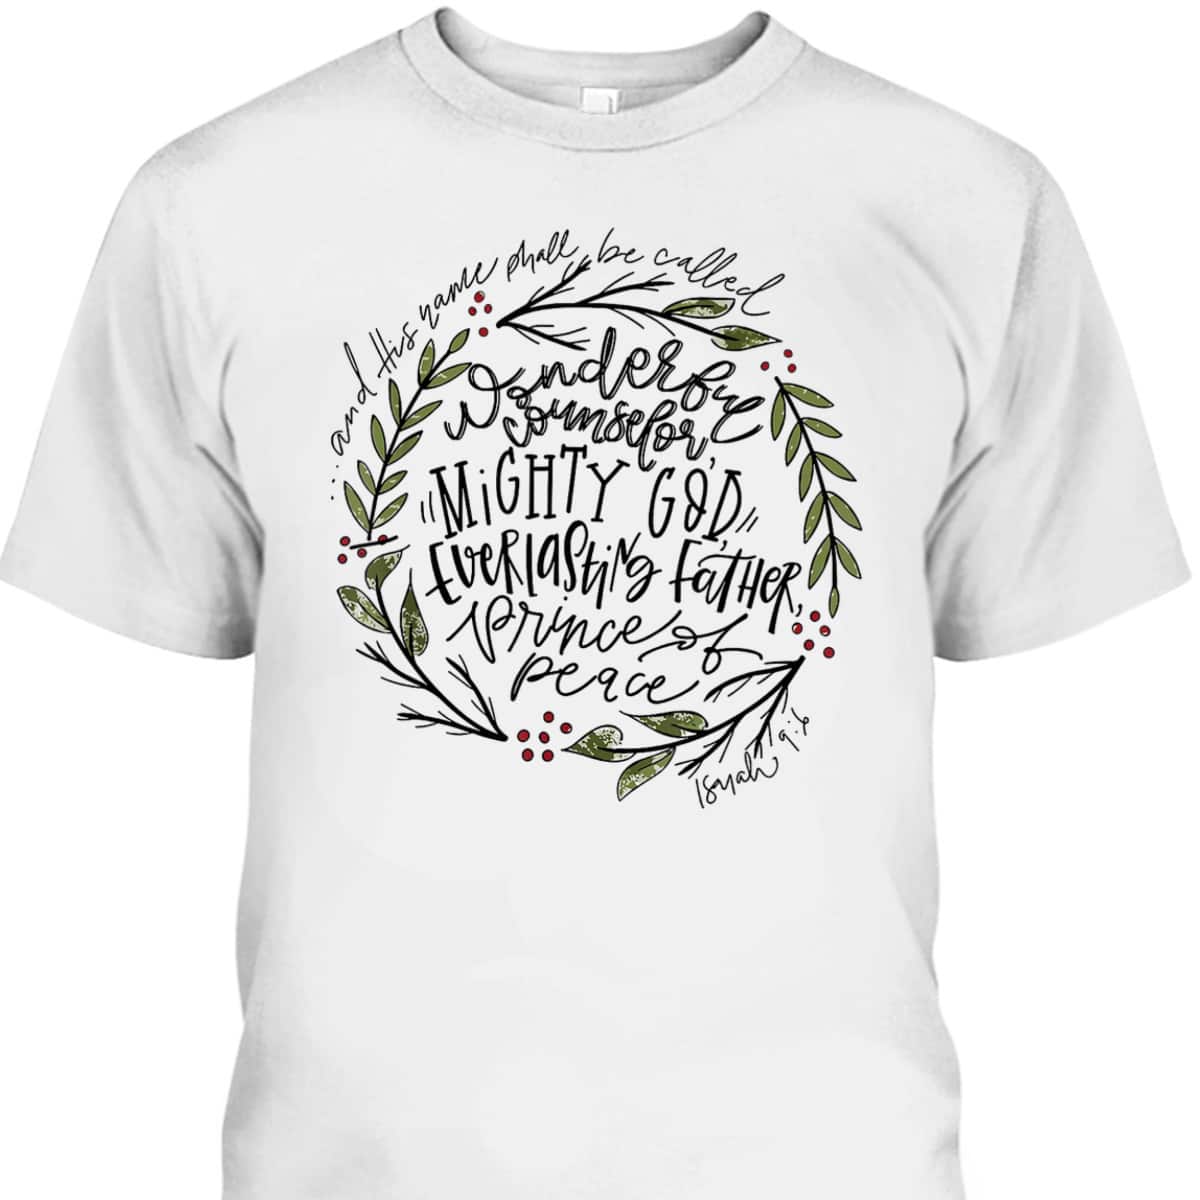 Wonderful Counselor Mighty God Isaiah Christian Christmas T-Shirt